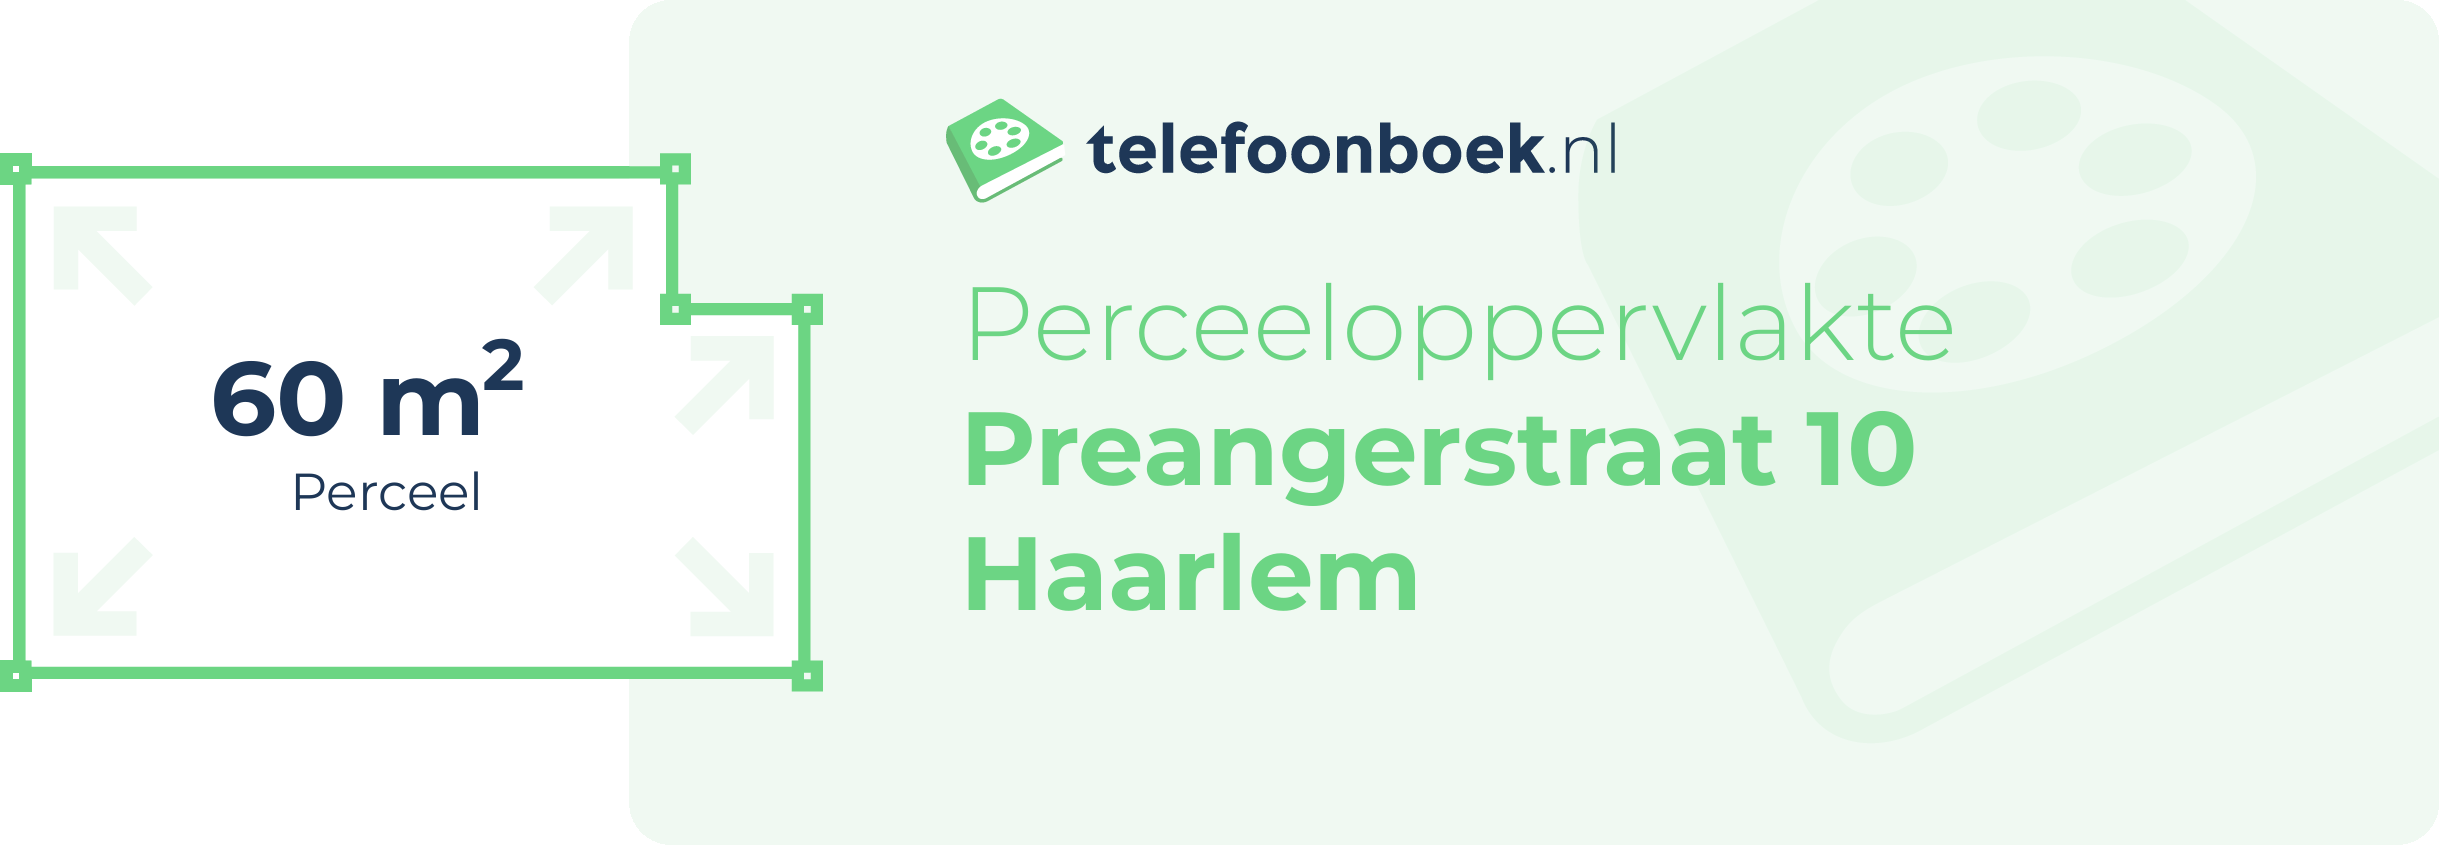 Perceeloppervlakte Preangerstraat 10 Haarlem